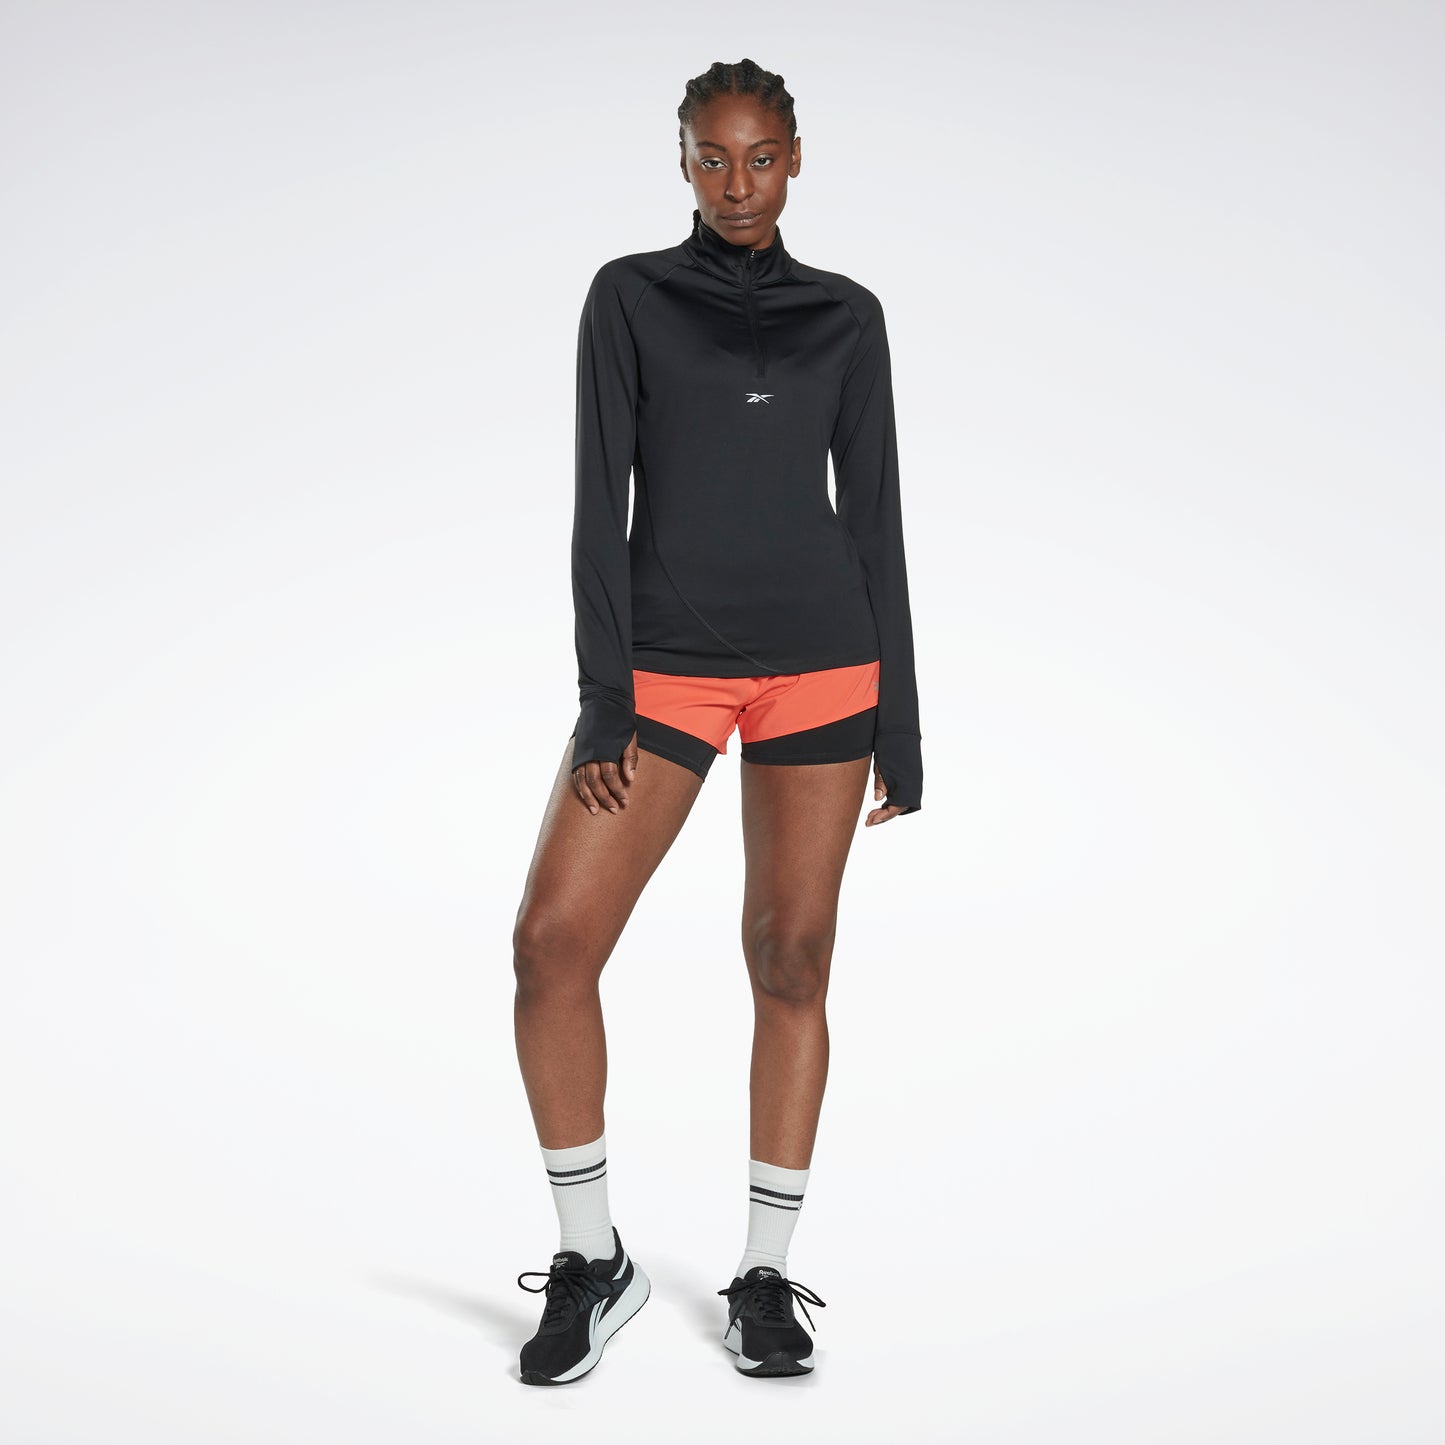 Women's Running Clothing & Apparel – SBRX